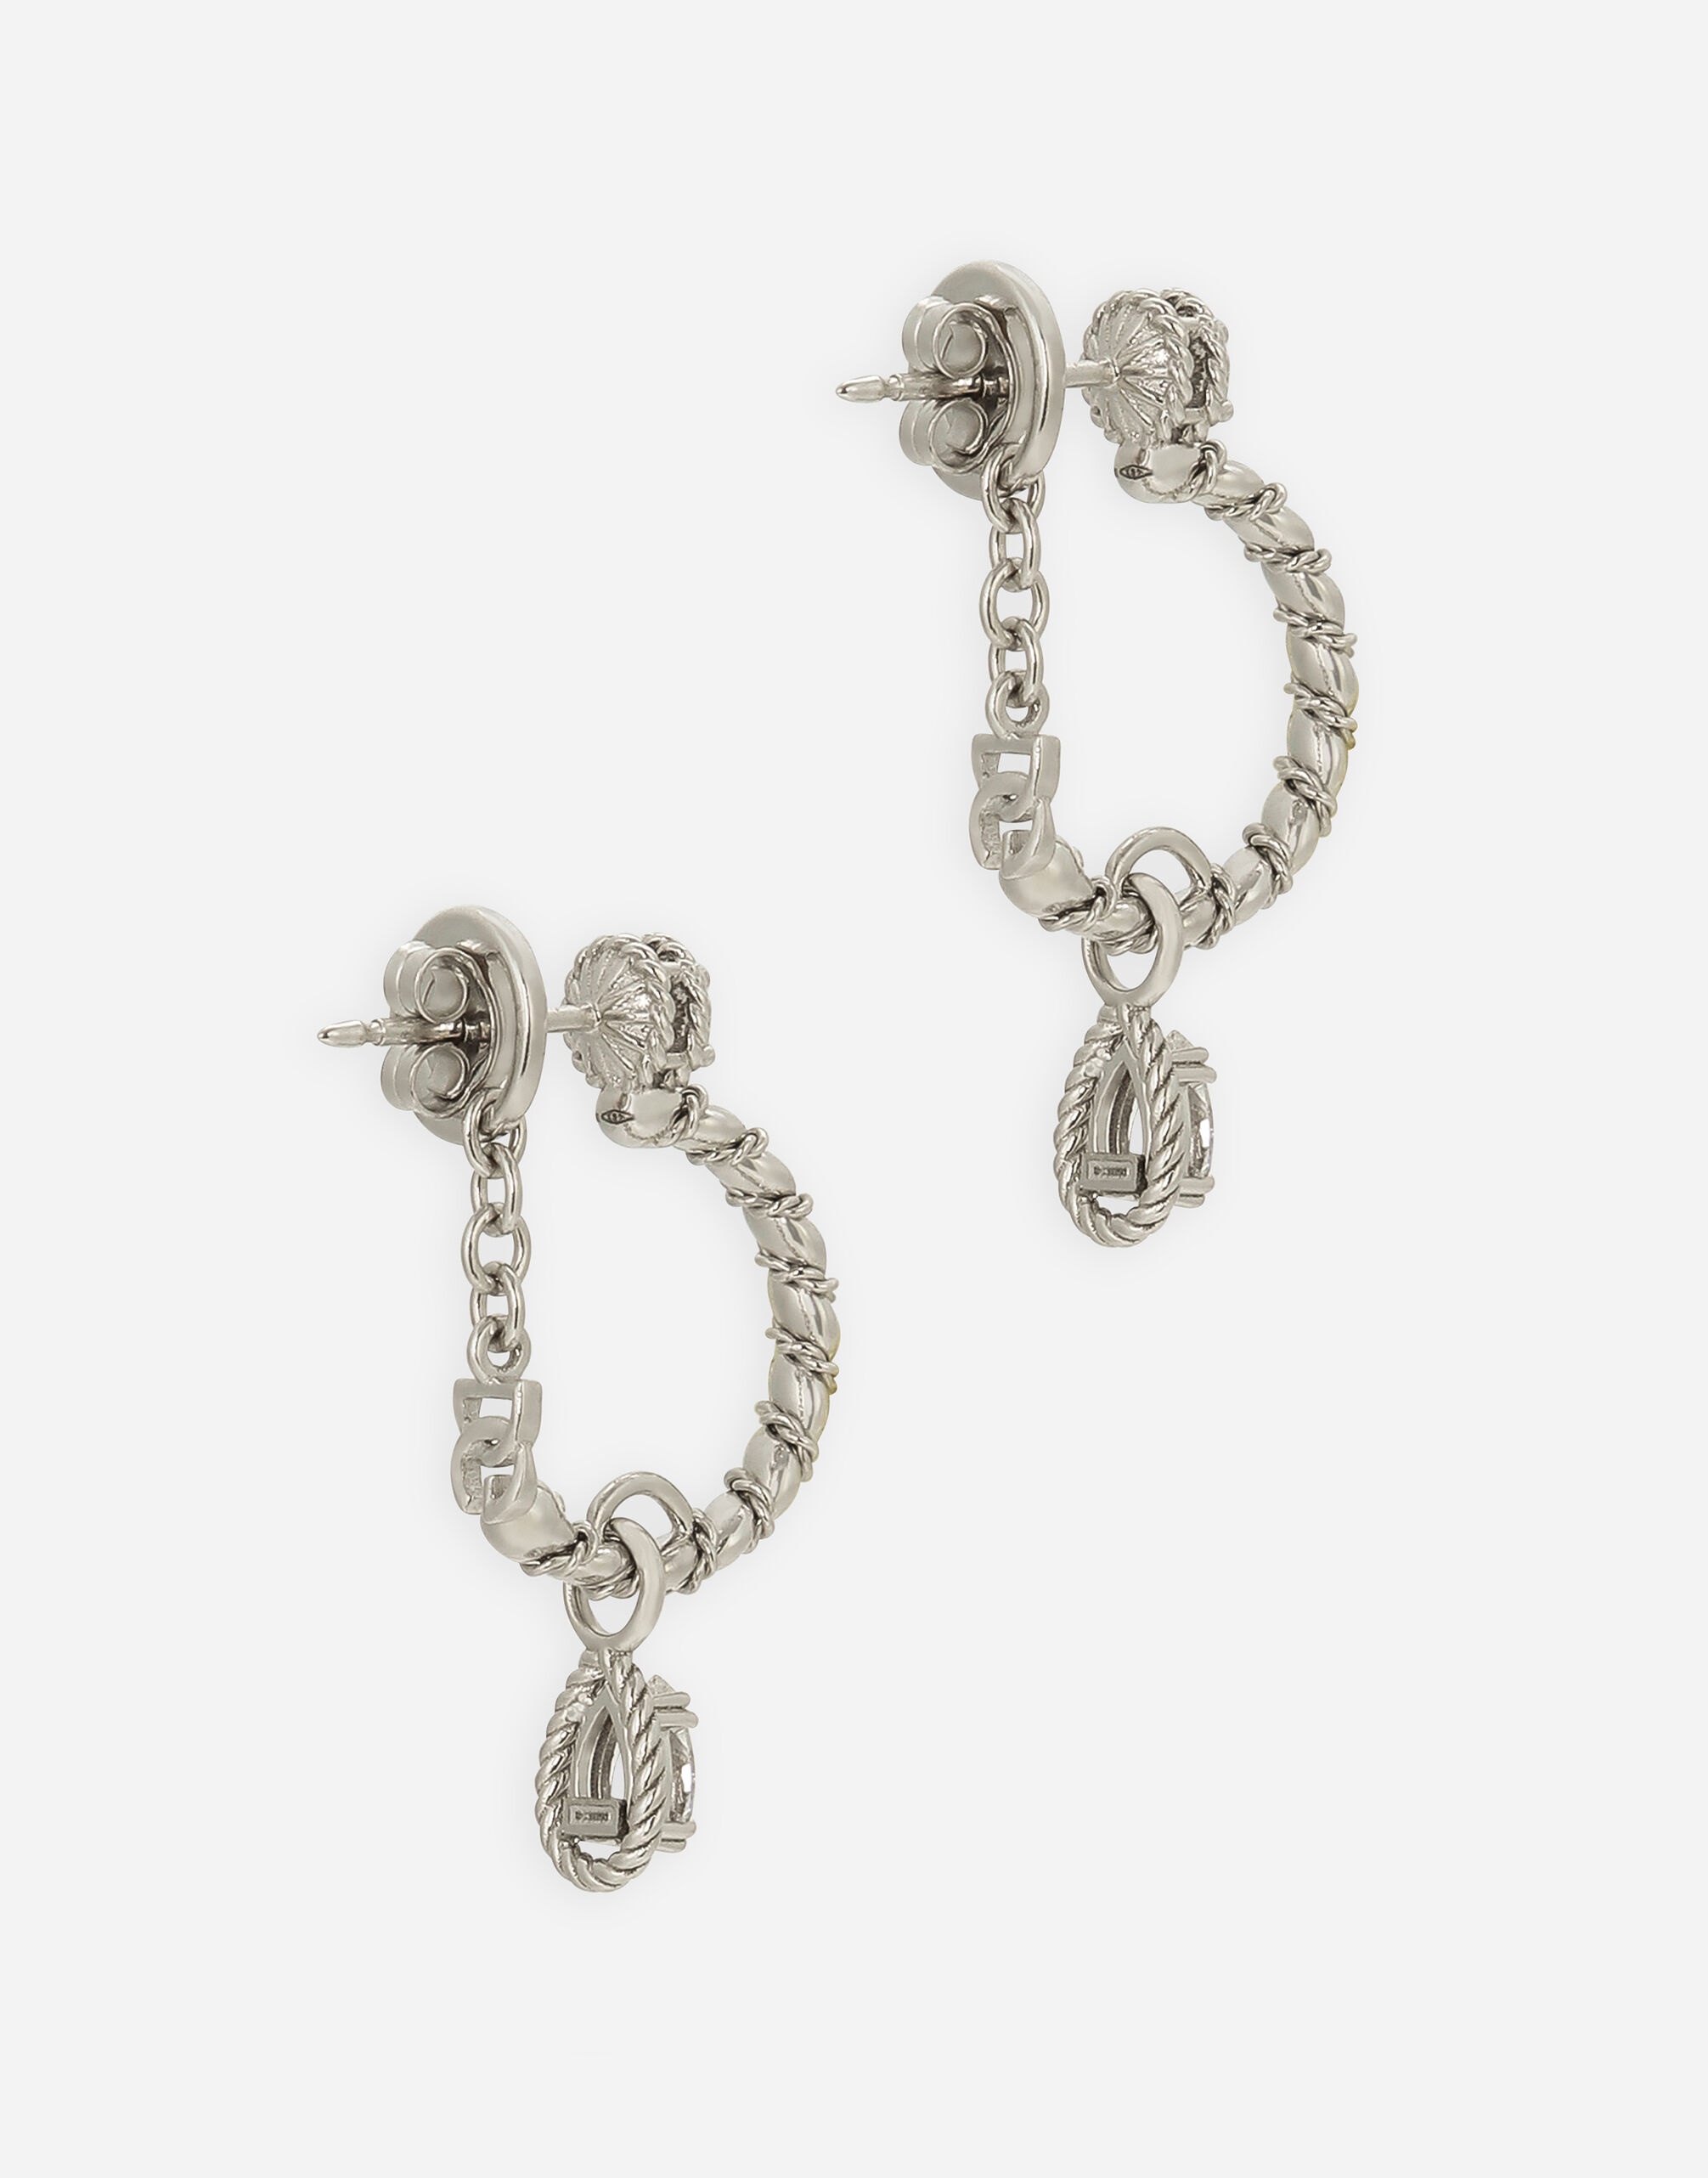 Easy Diamond earrings in white gold 18Kt and diamonds - 4